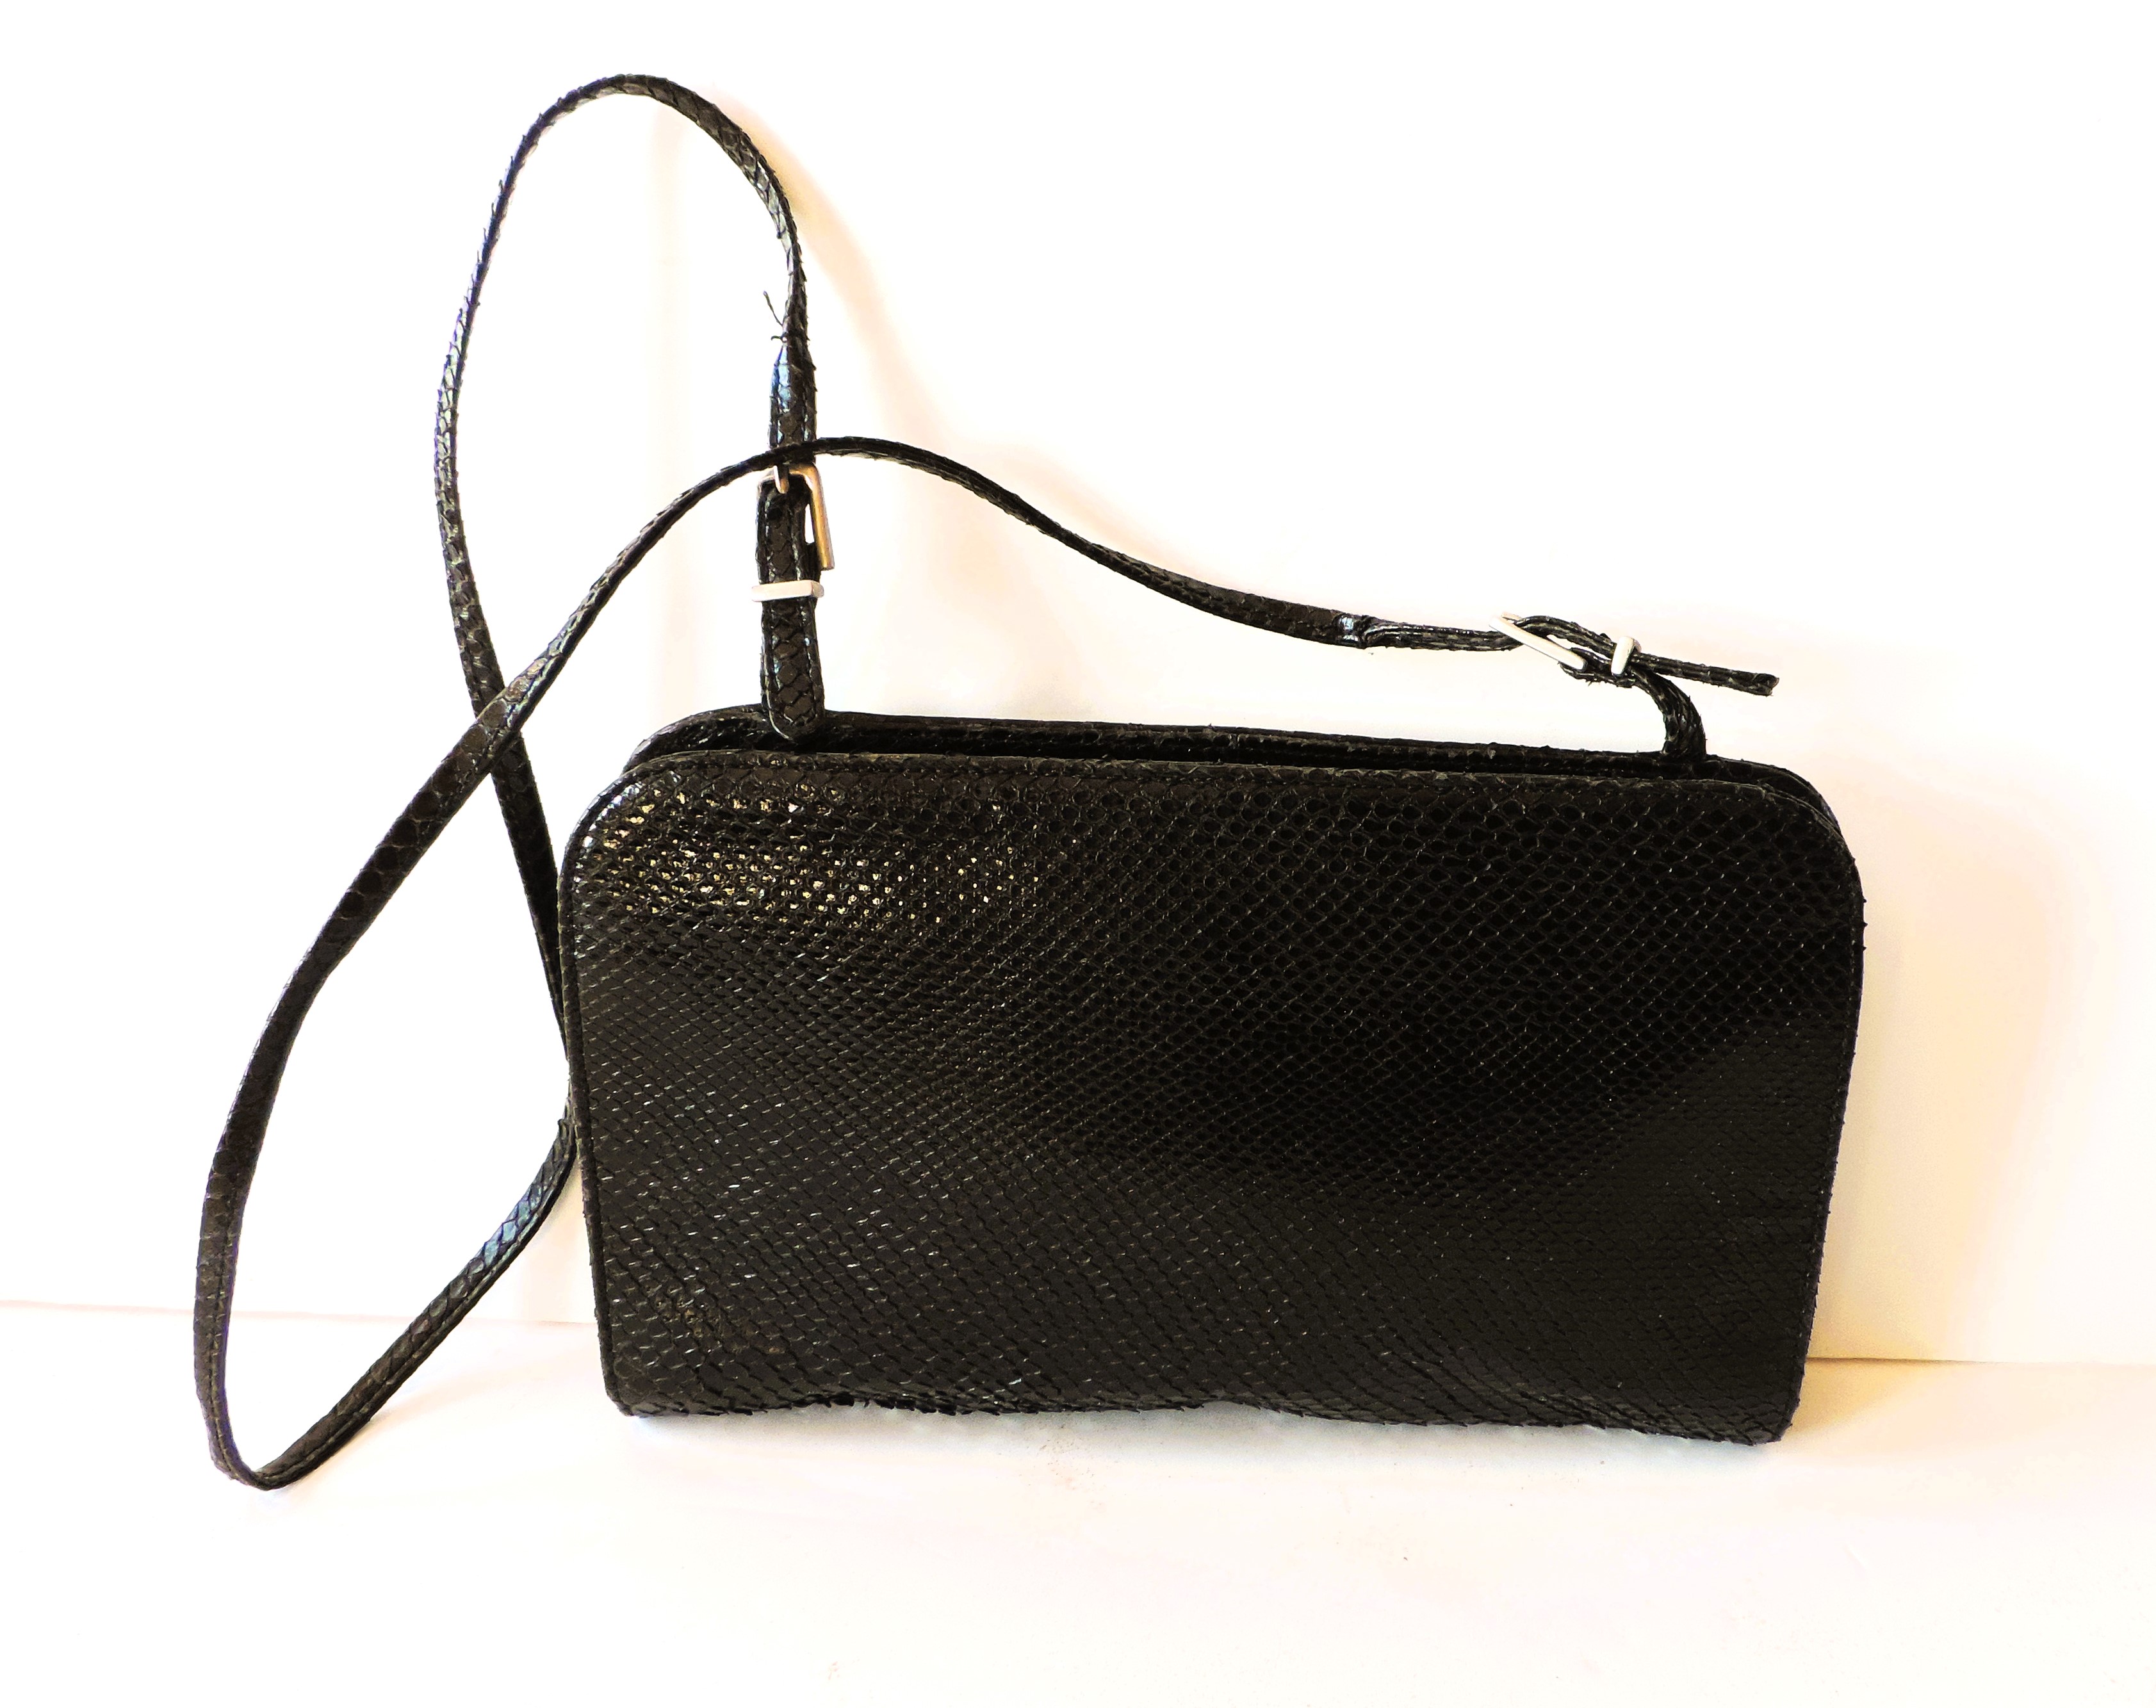 Vintage Giuseppe Zanotti Black Lizard Skin Shoulder Bag - Image 4 of 7